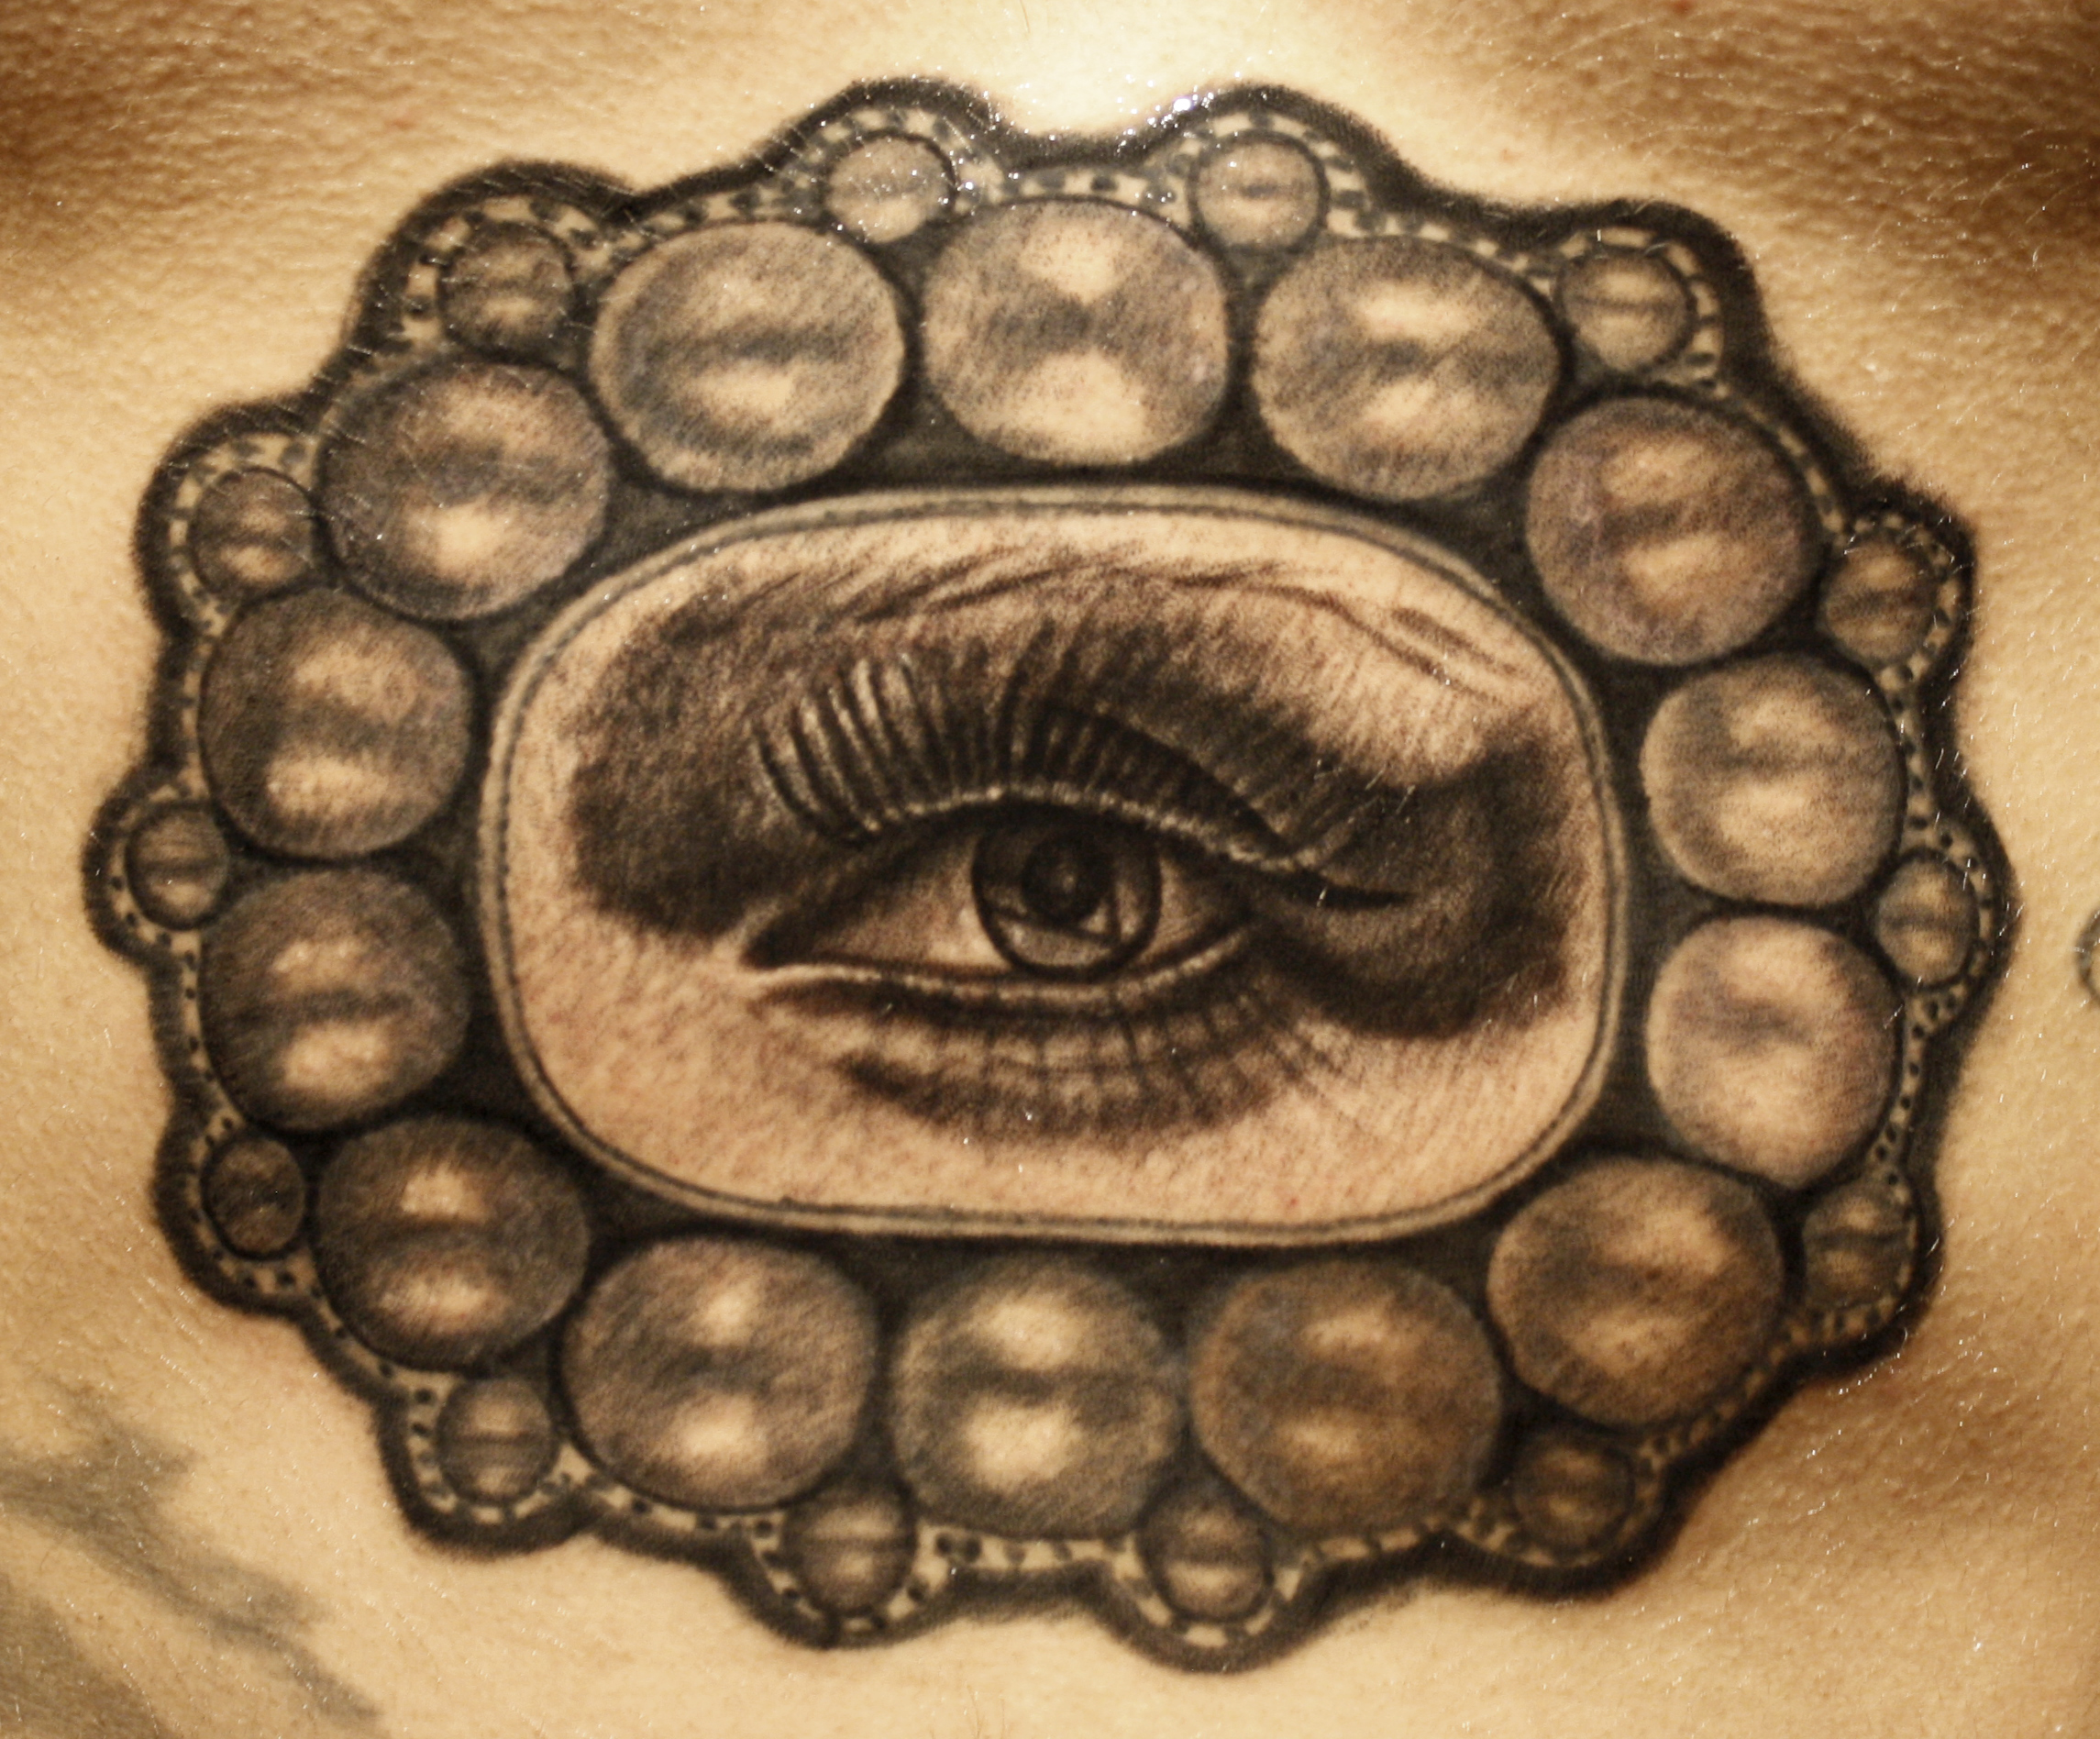 Tattoo uploaded by Ink Lovers Tattoo studio  Look into my eyes Tattoos  Cartagena with ink lovers studio wwwinkloversco  Tattoodo